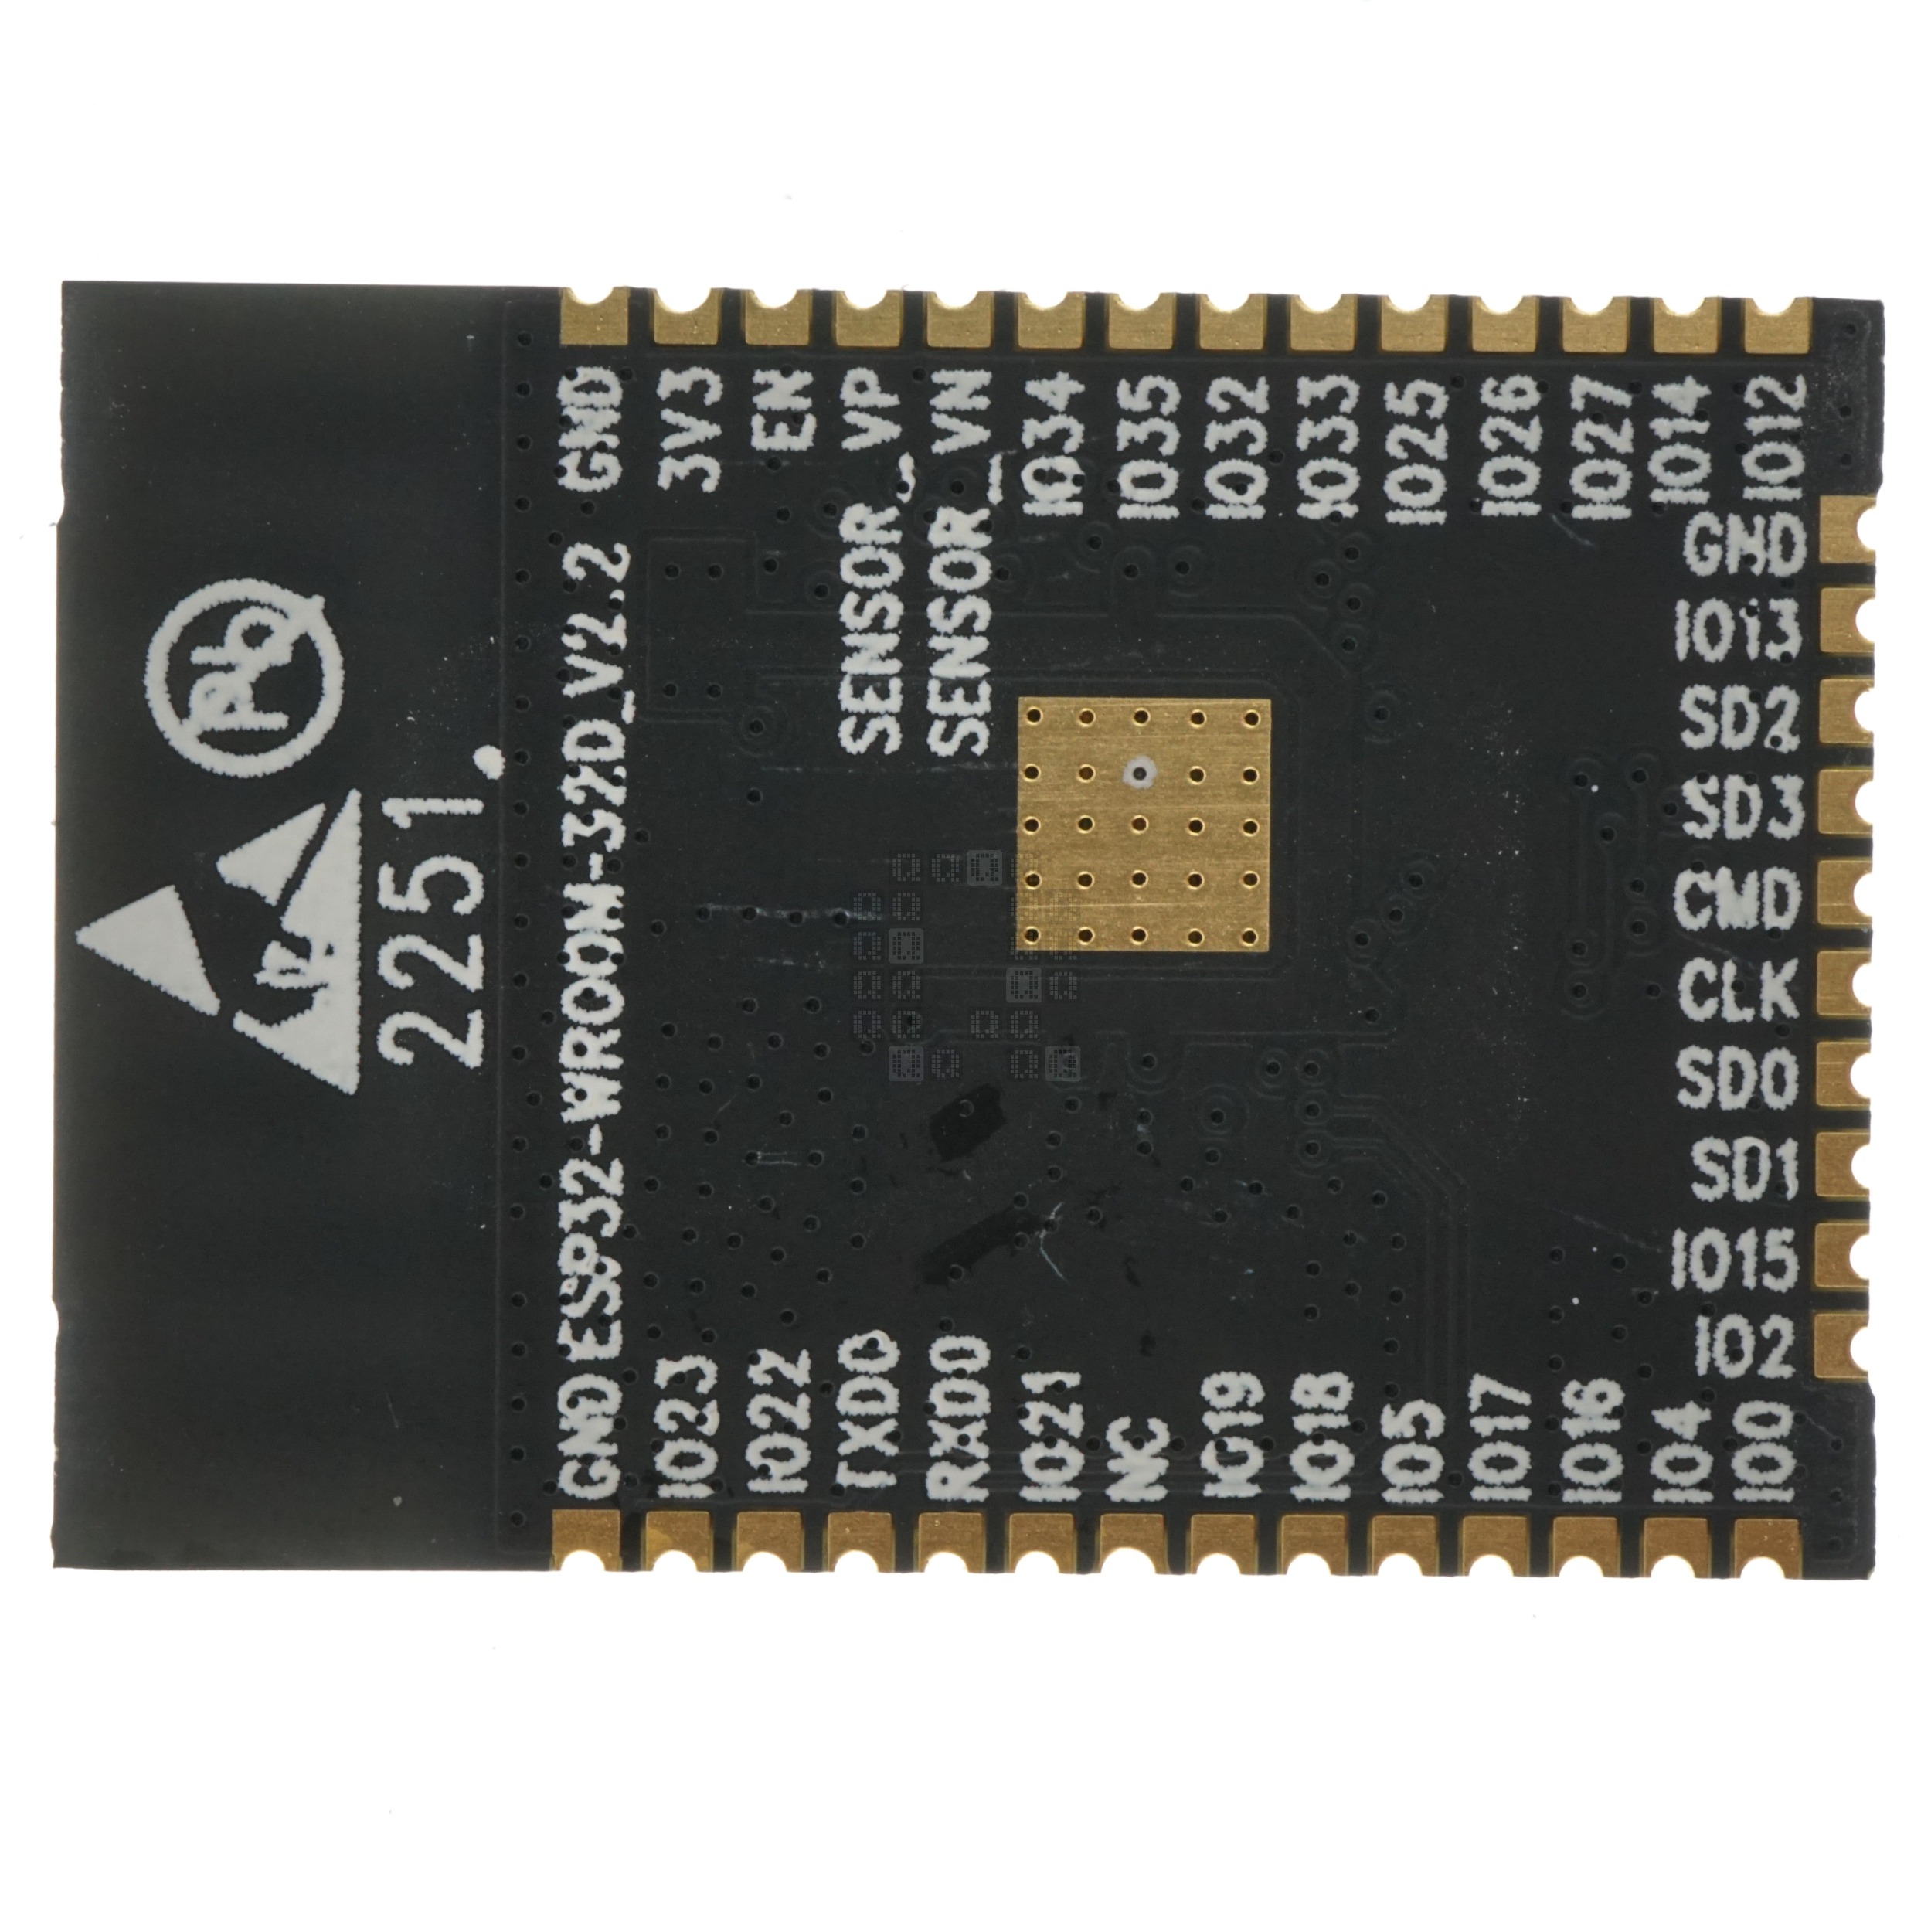 Espressif ESP32-WROOM-32D-XXN16 Microprocessor with Wi-Fi